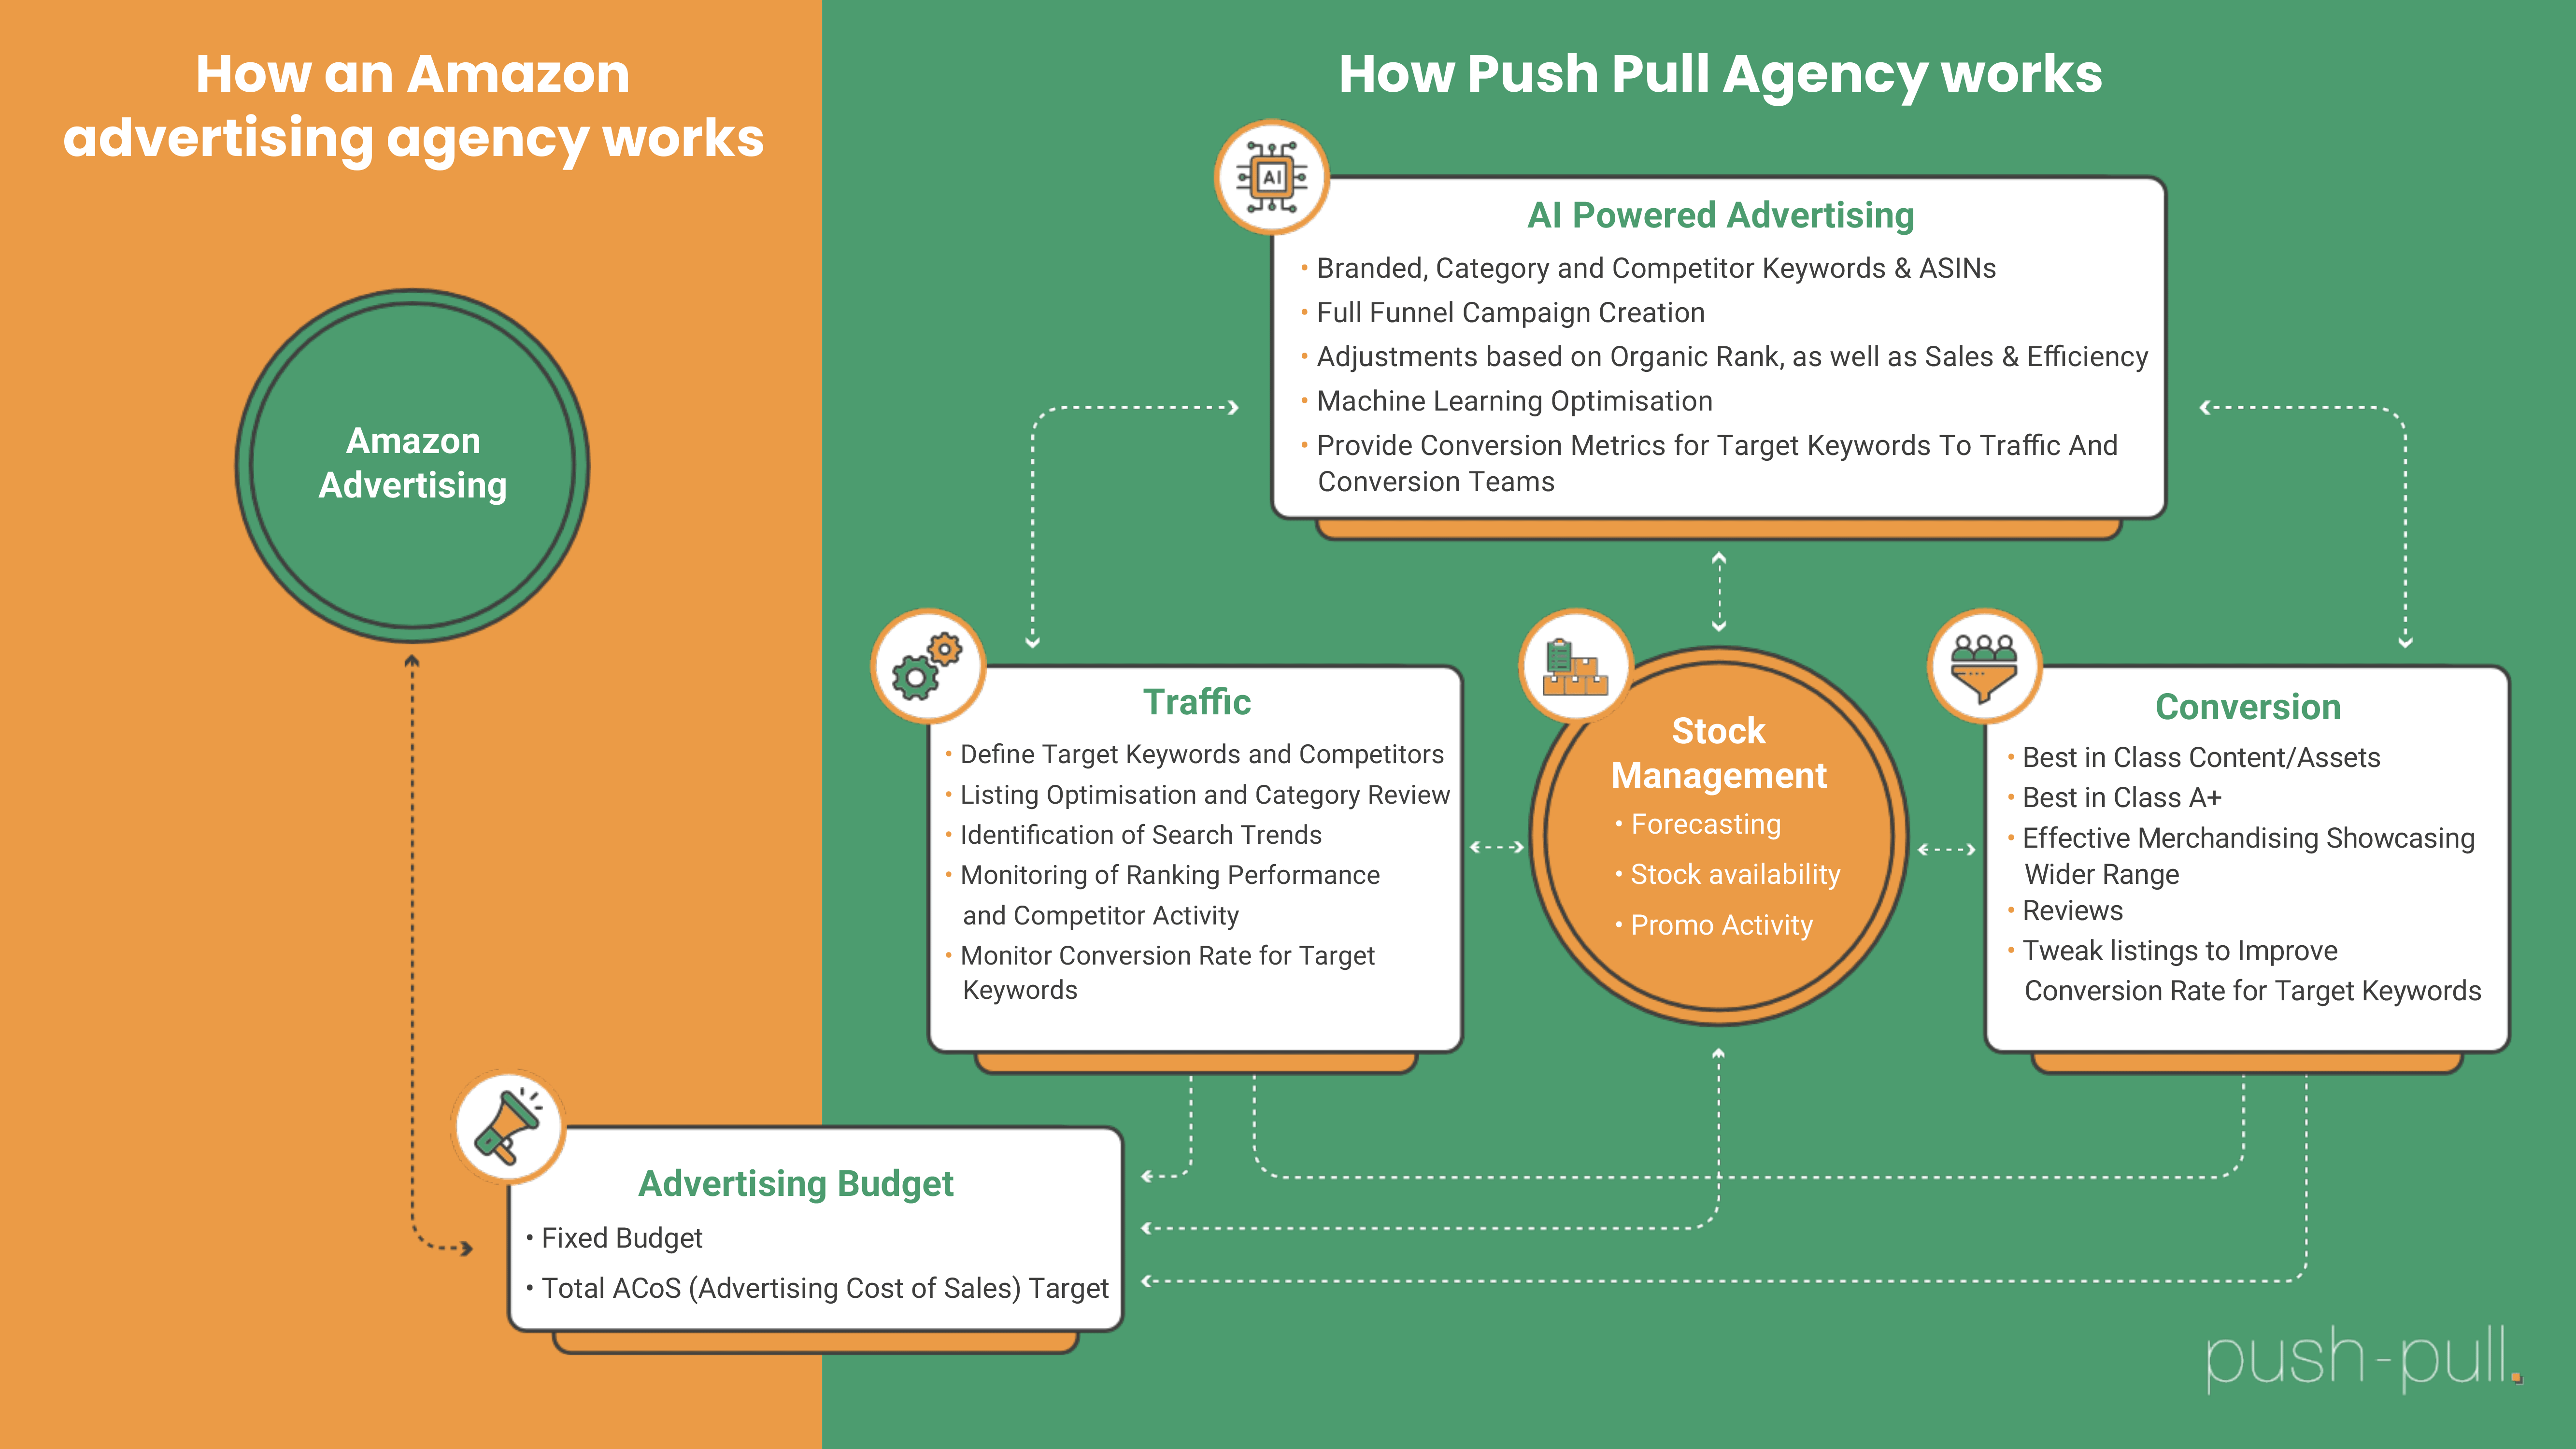 How an Amazon Agency Works